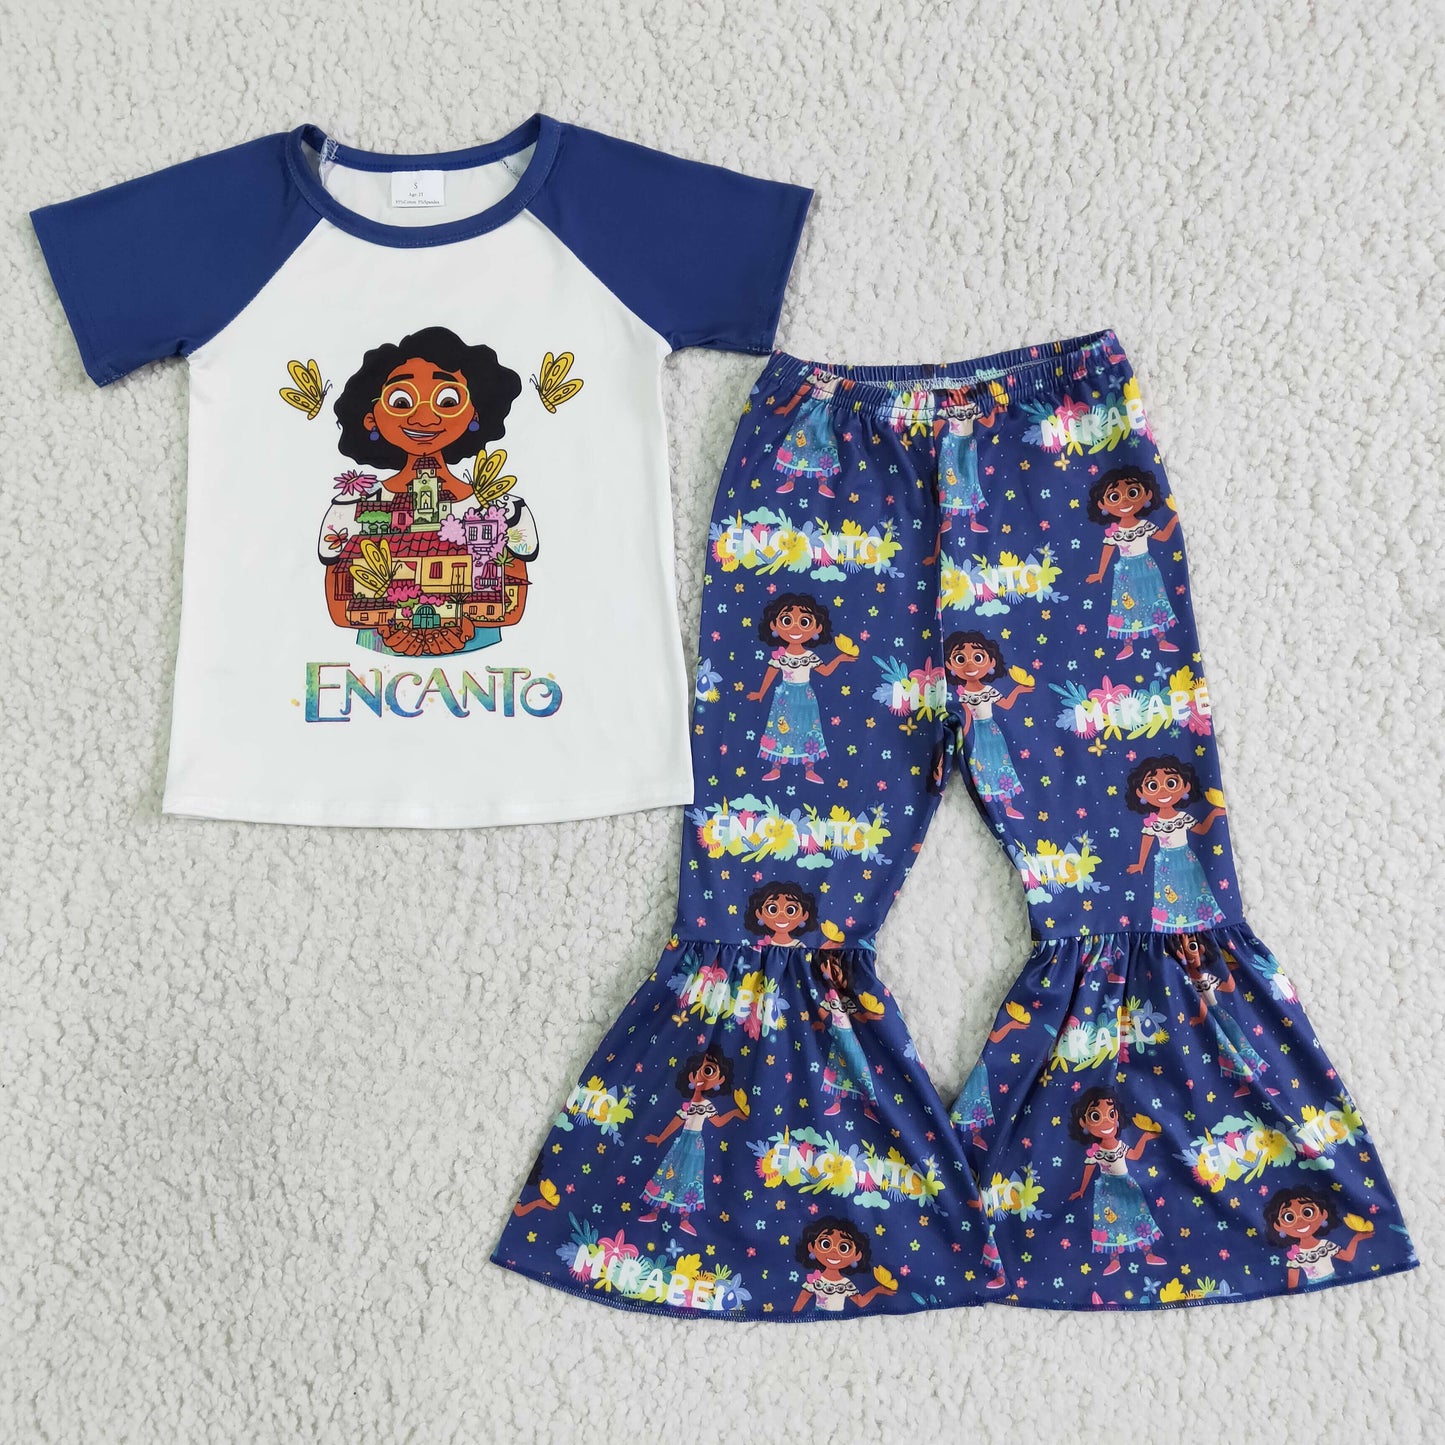 cartoon baby girl’s outfit pants set